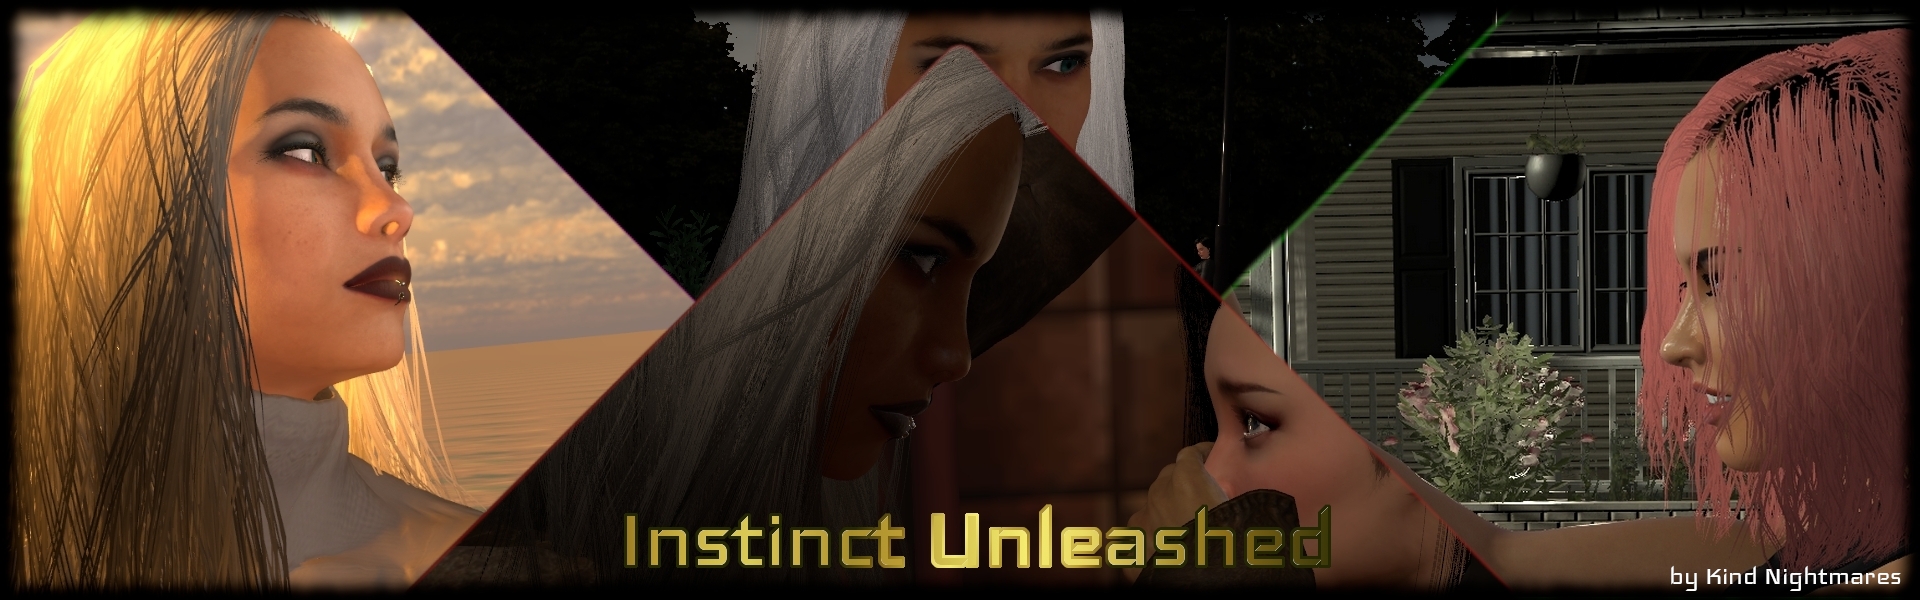 Instinct Unleashed1.jpg